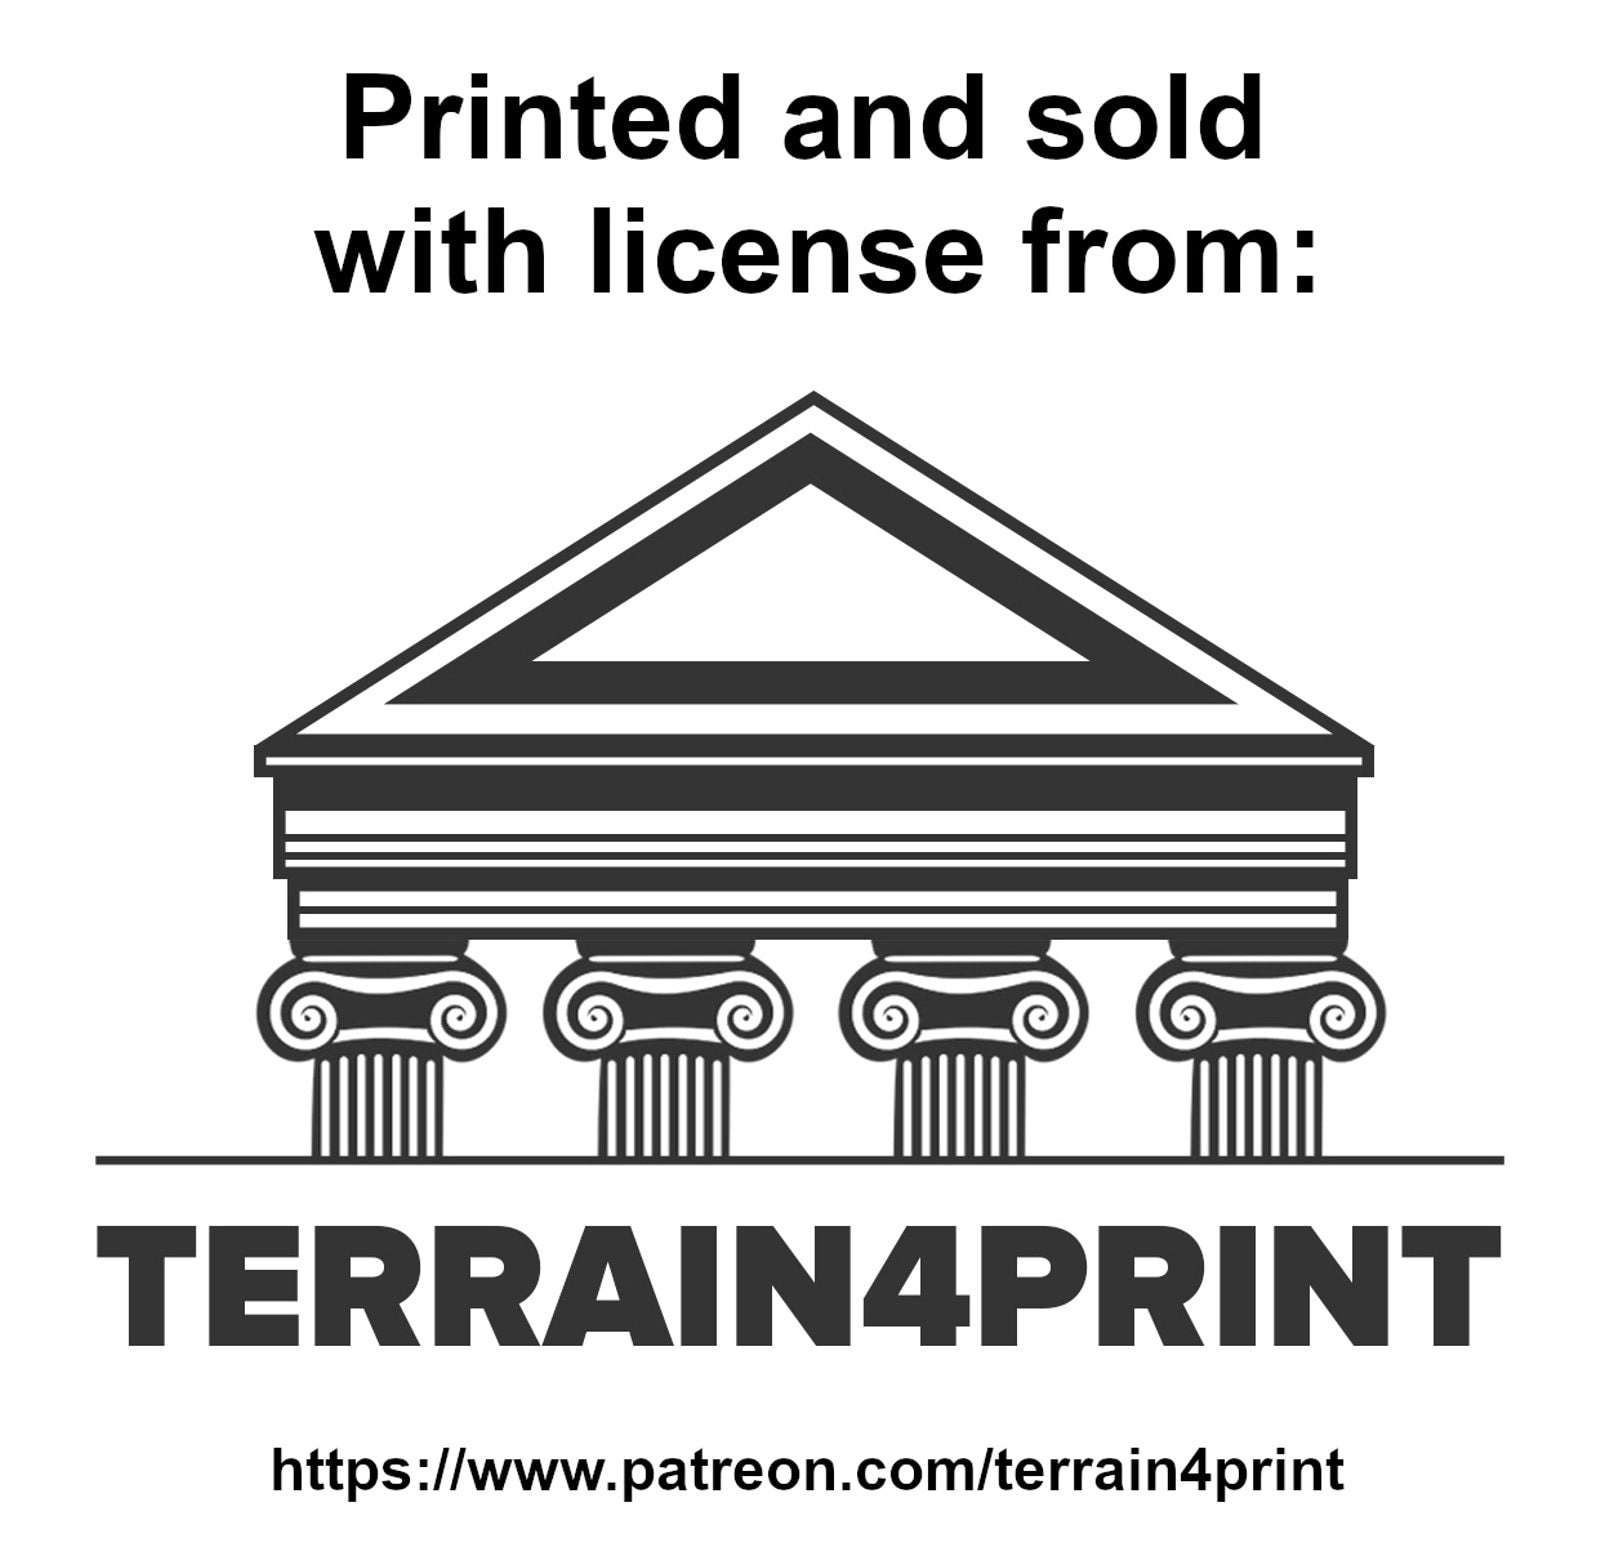 Fantasy Ruins Terrain #1 / 2 story / 25mm or 30mm Tabletop Wargaming Terrain / Print to Order / Licensed Printer